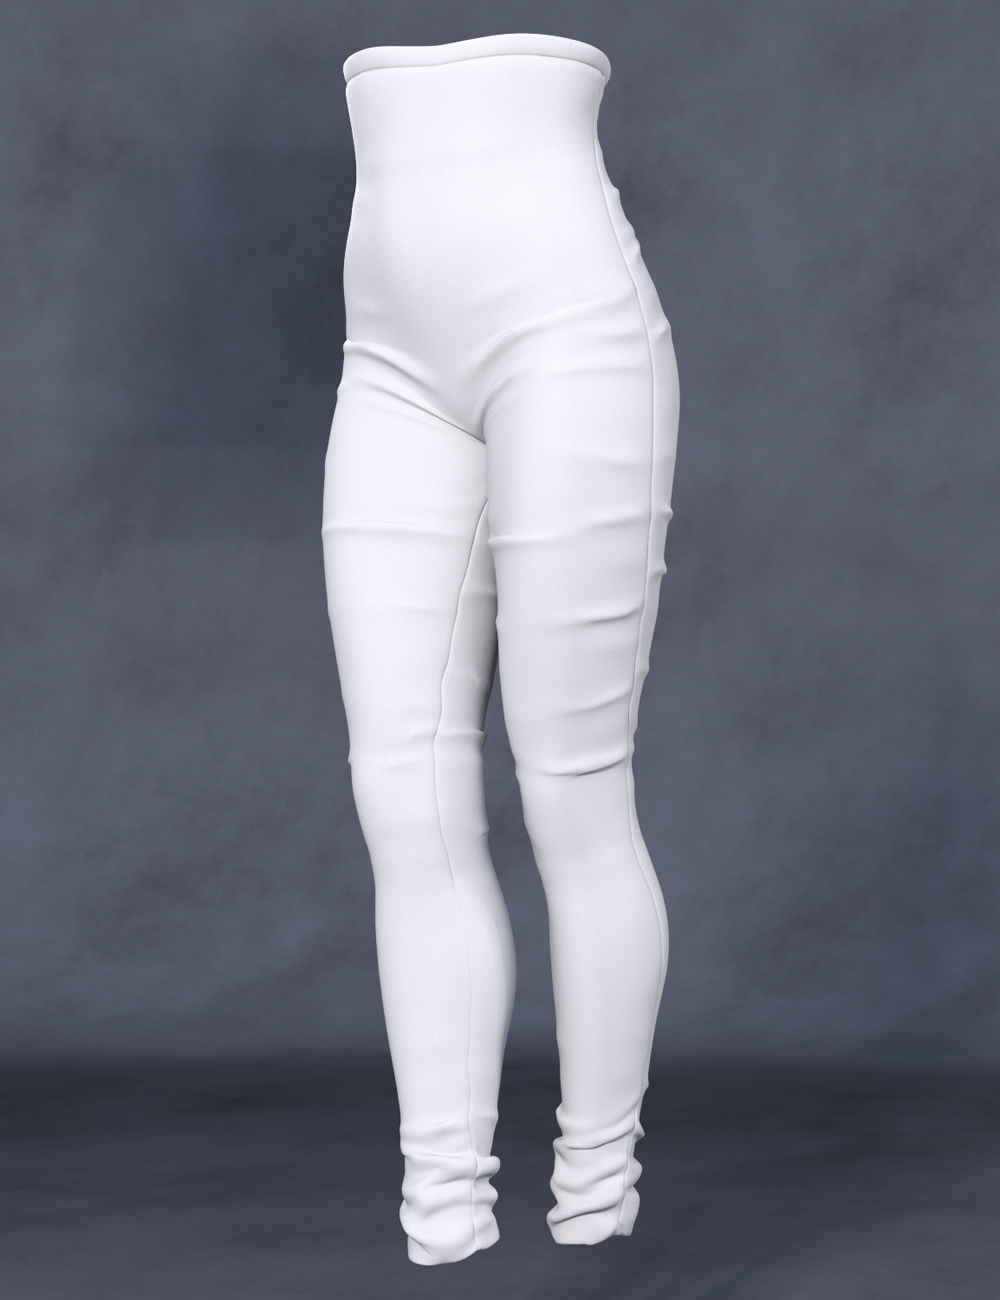 dForce Fancy Pants Trousers for Genesis 8 and 8.1 Females by: Nikisatez, 3D Models by Daz 3D